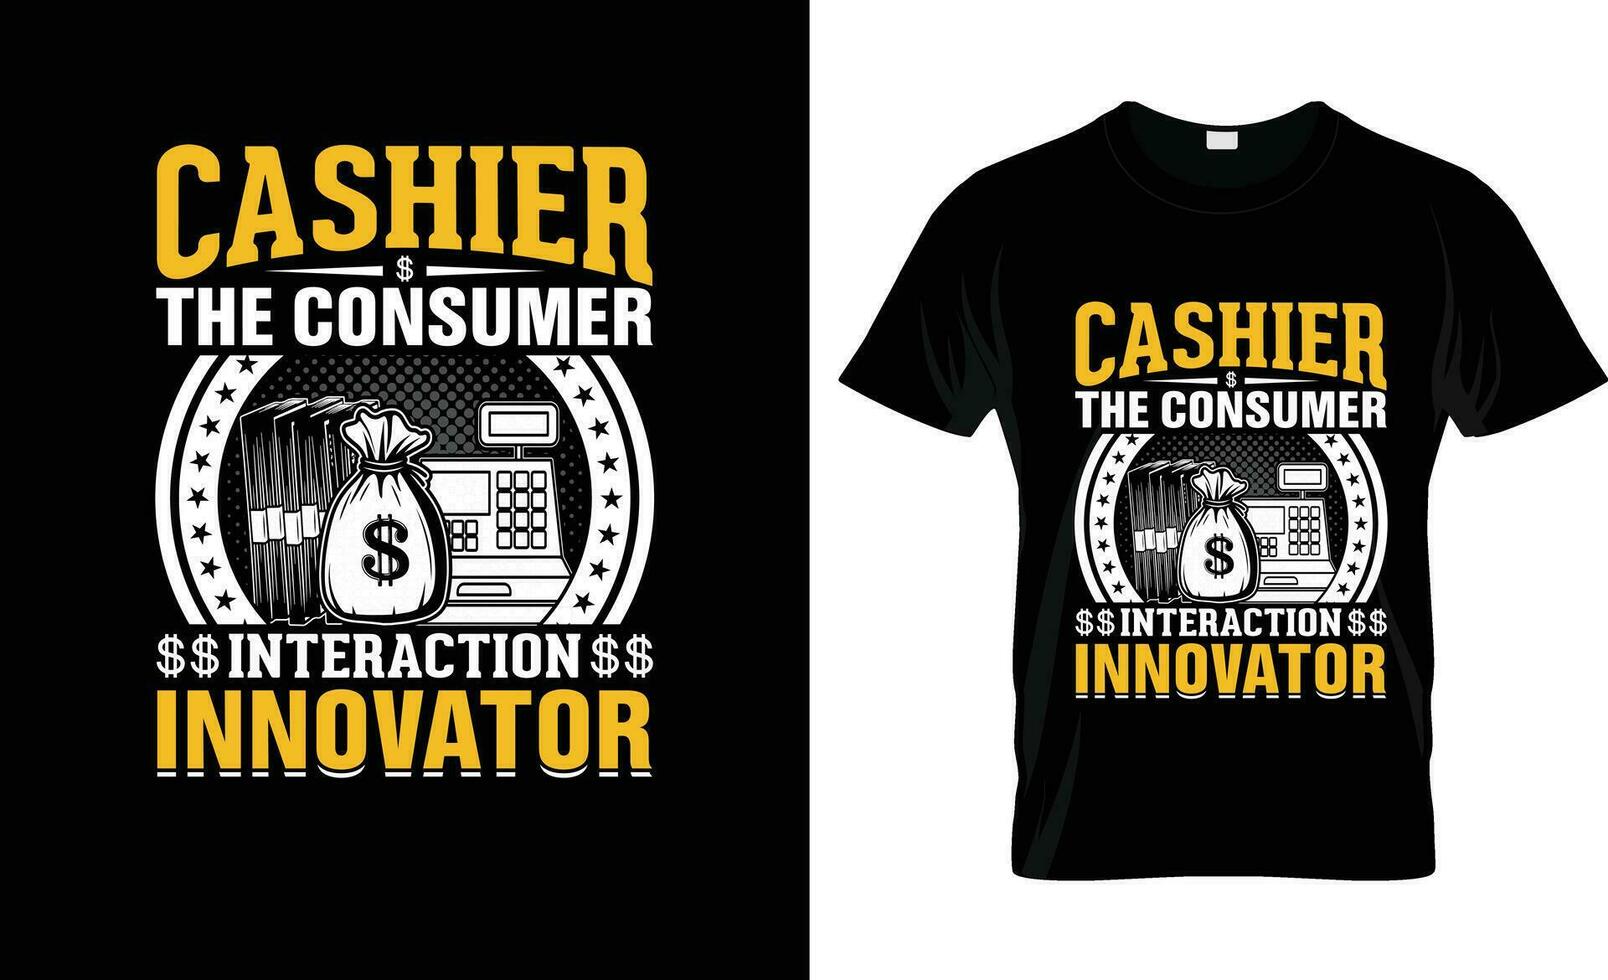 Kassierer das Verbraucher Interaktion Innovator bunt Grafik T-Shirt, T-Shirt drucken Attrappe, Lehrmodell, Simulation vektor